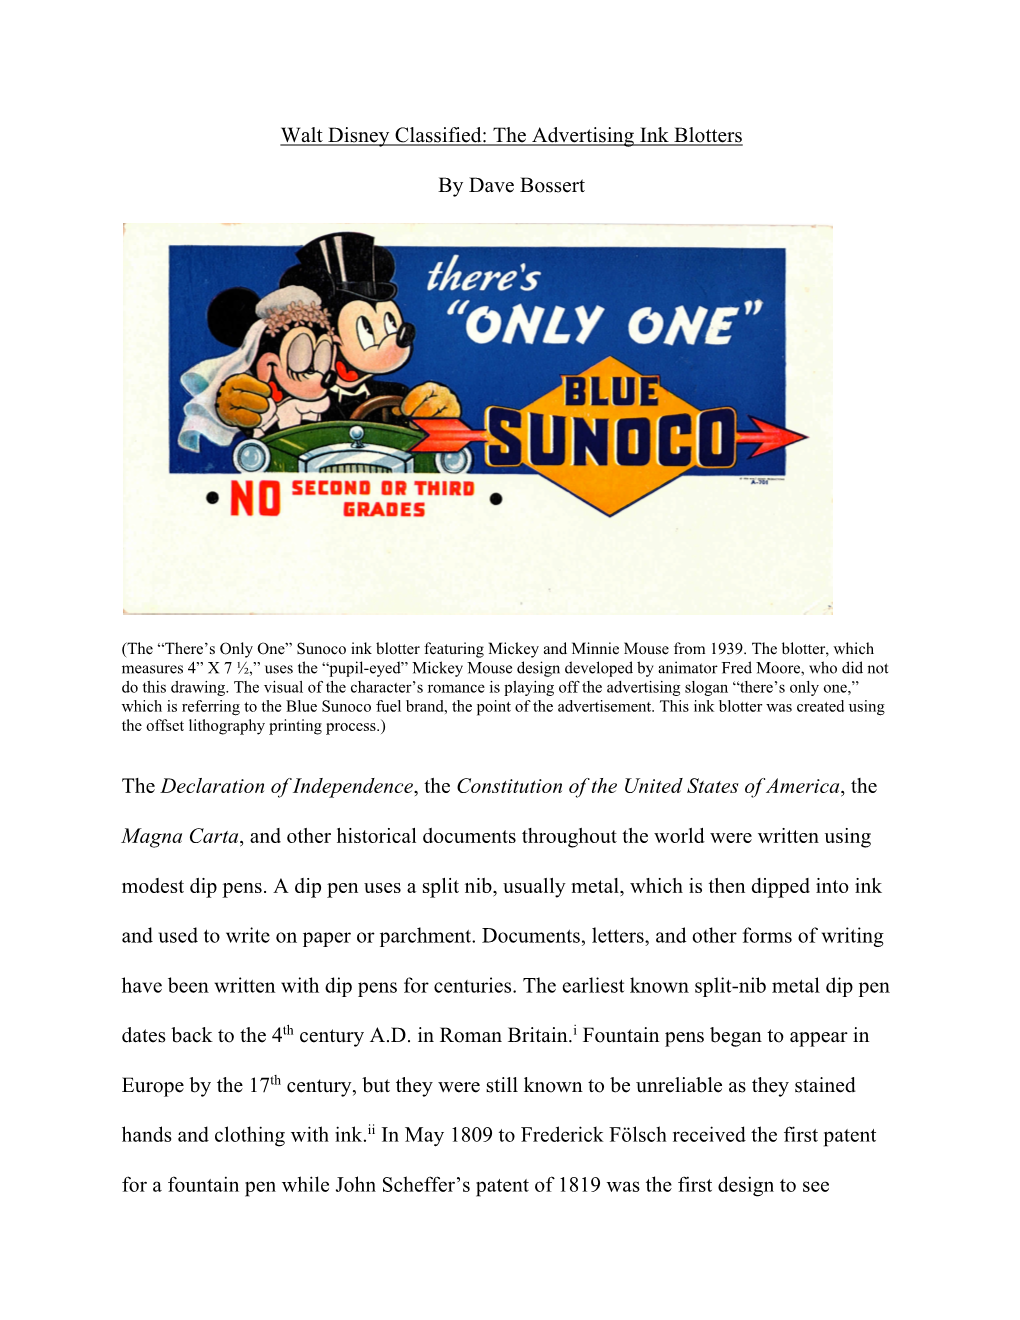 Walt Disney Classified: the Advertising Ink Blotters by Dave Bossert